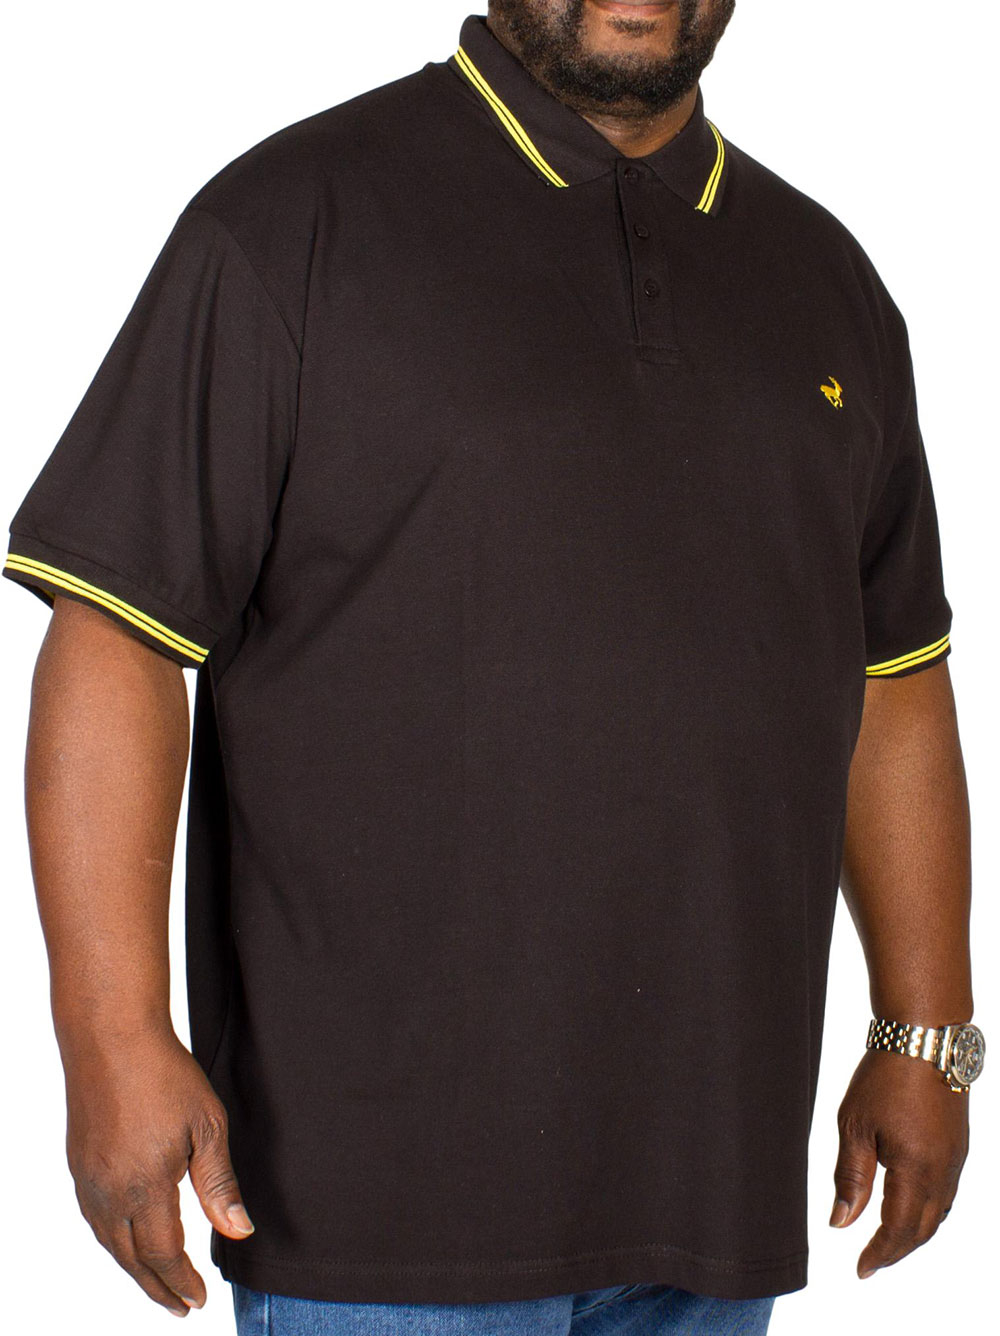 black polo shirt yellow trim